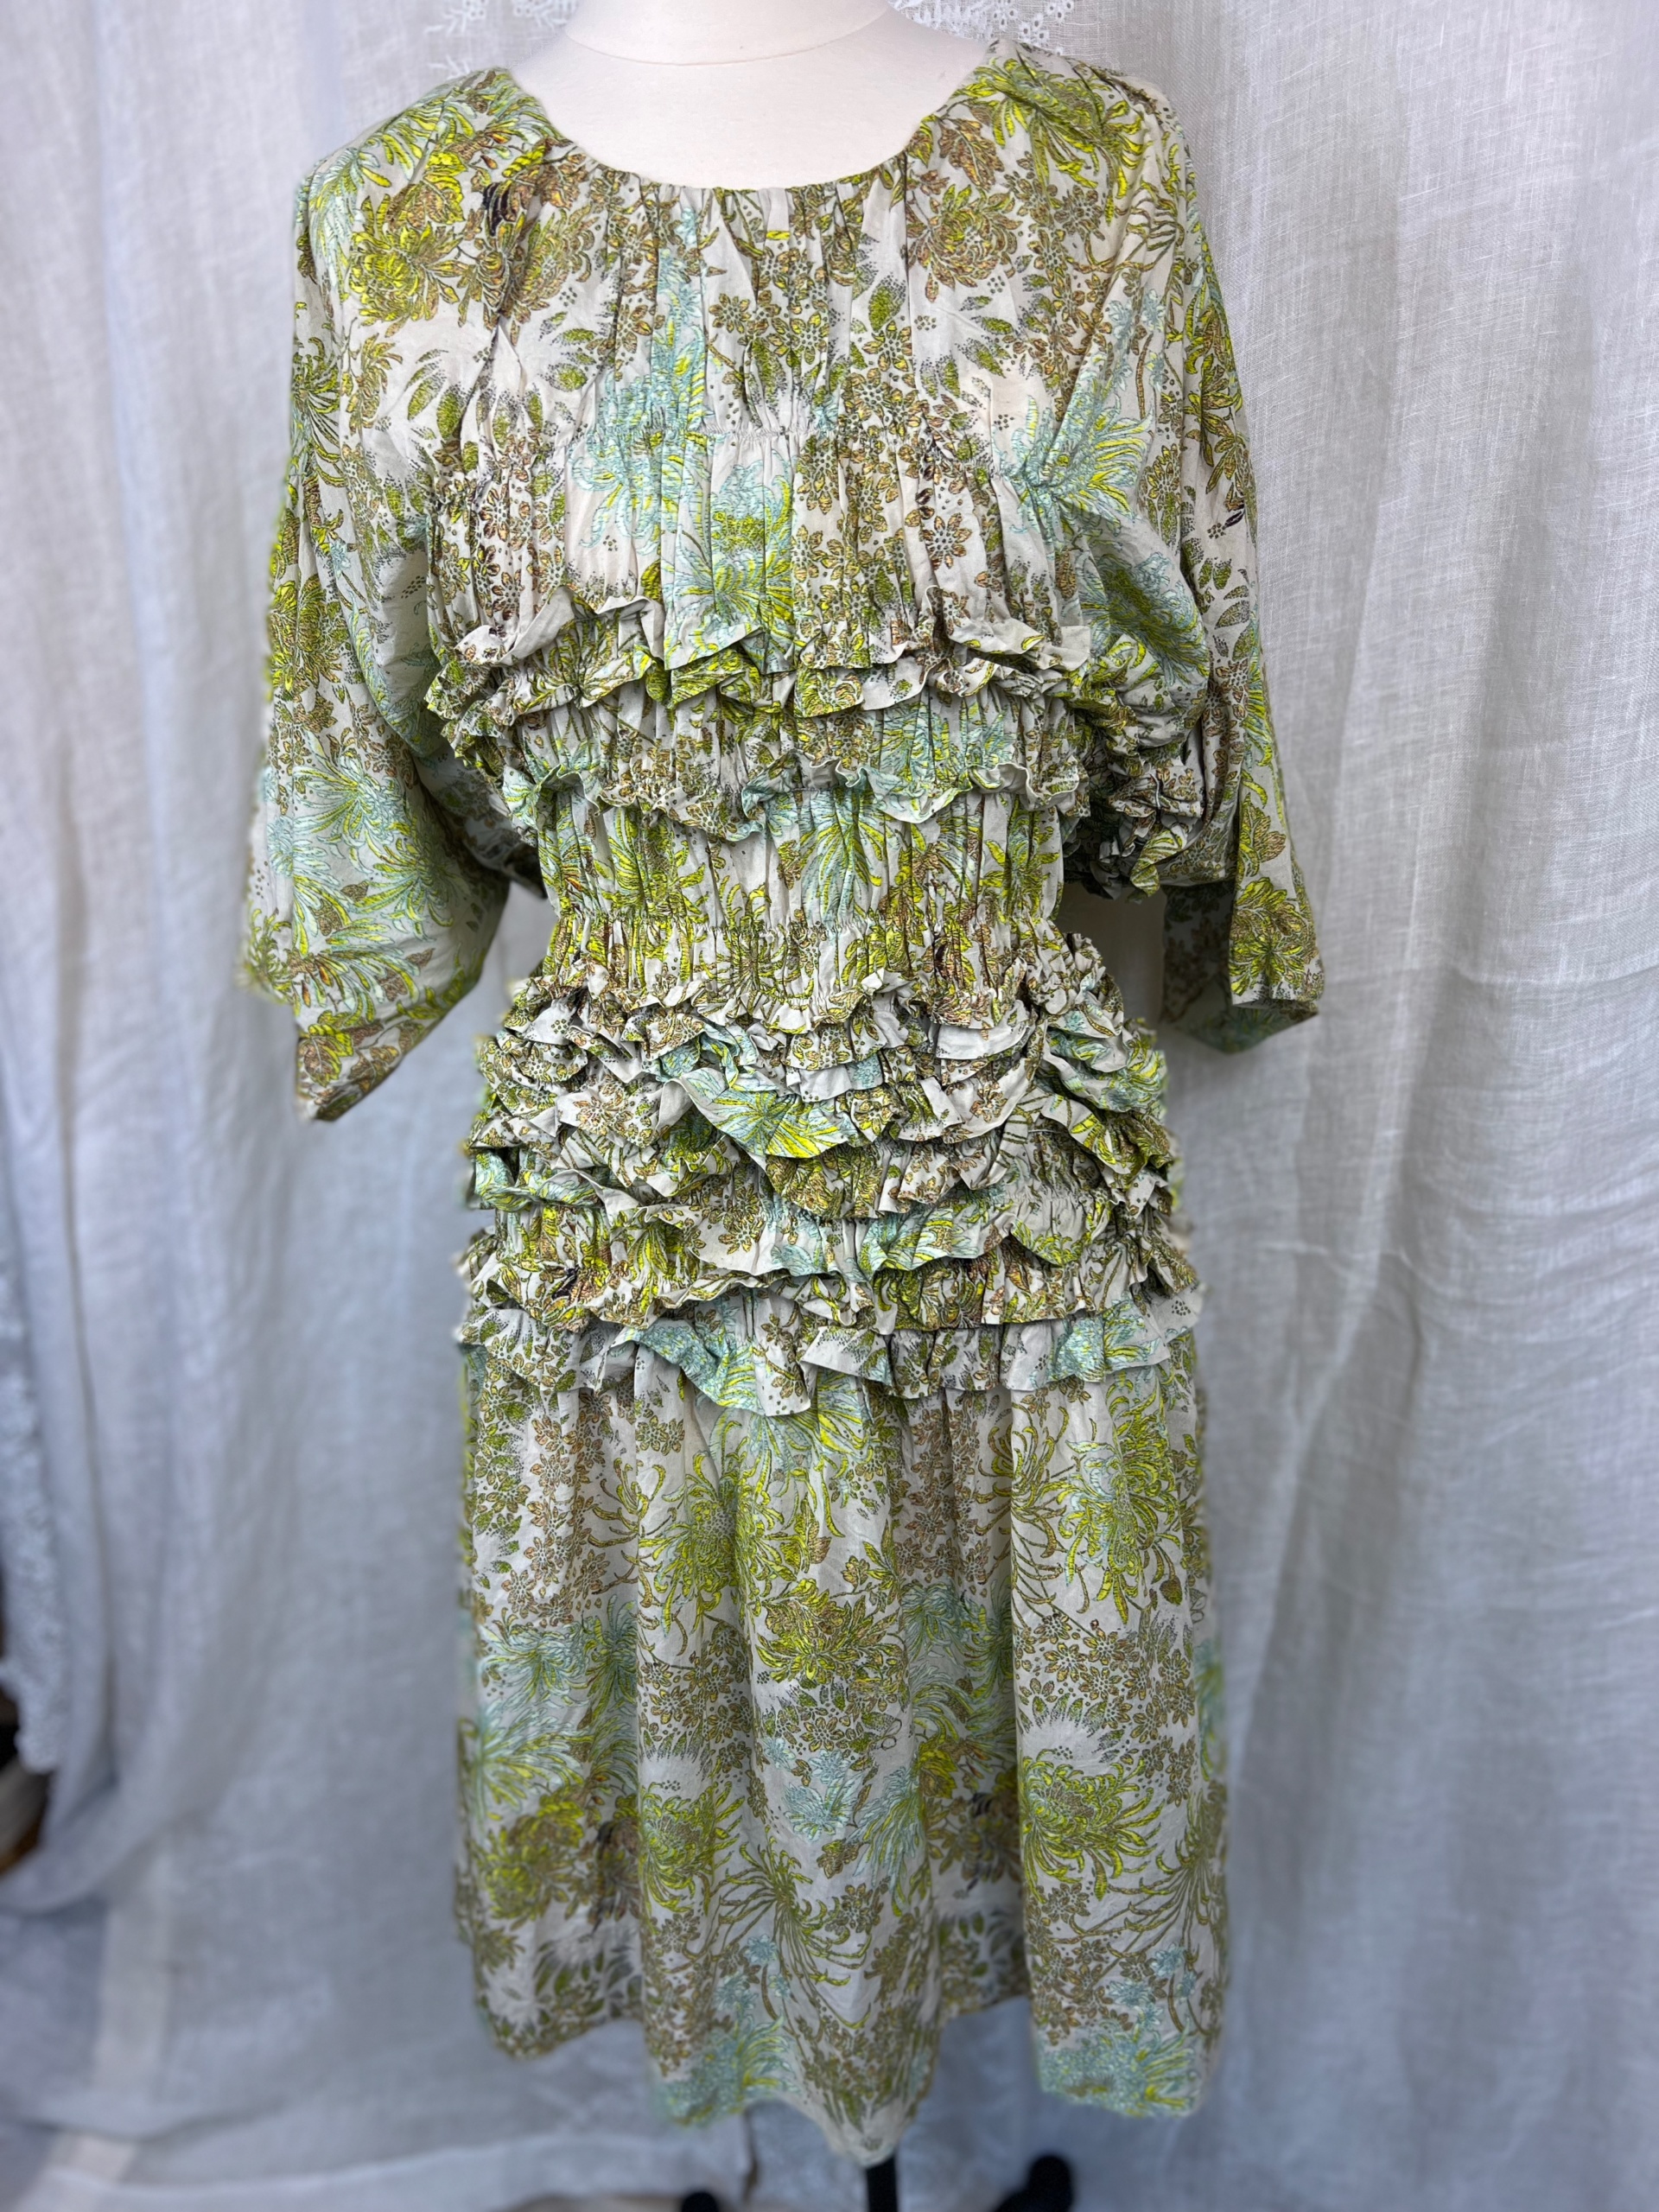 Ingall’s Dress by Krista Larson - The Walnut Tree Shop